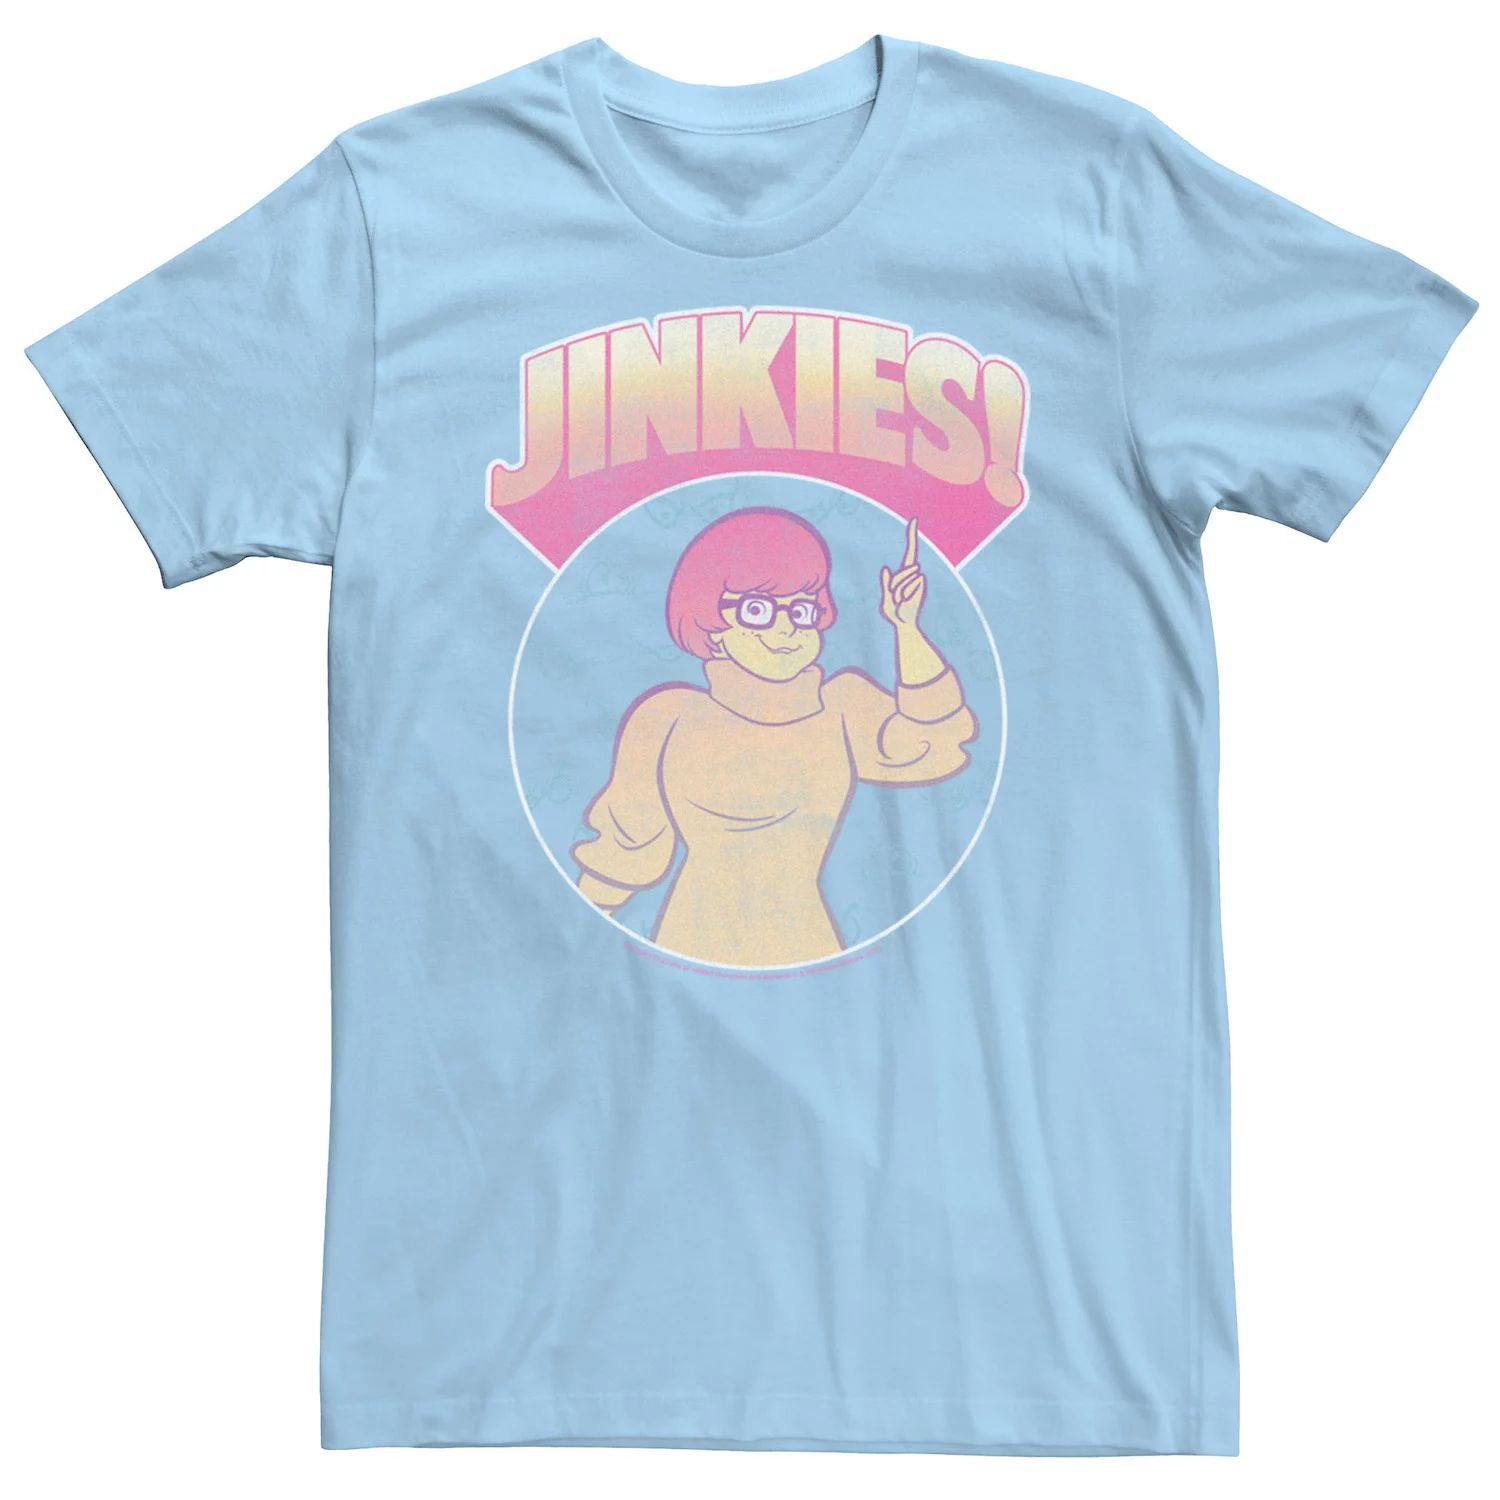 Мужская футболка Scooby-Doo Jinkies Velma с рисунком Licensed Character мужская футболка с коротким рукавом scooby doo velma jinkies fifth sun